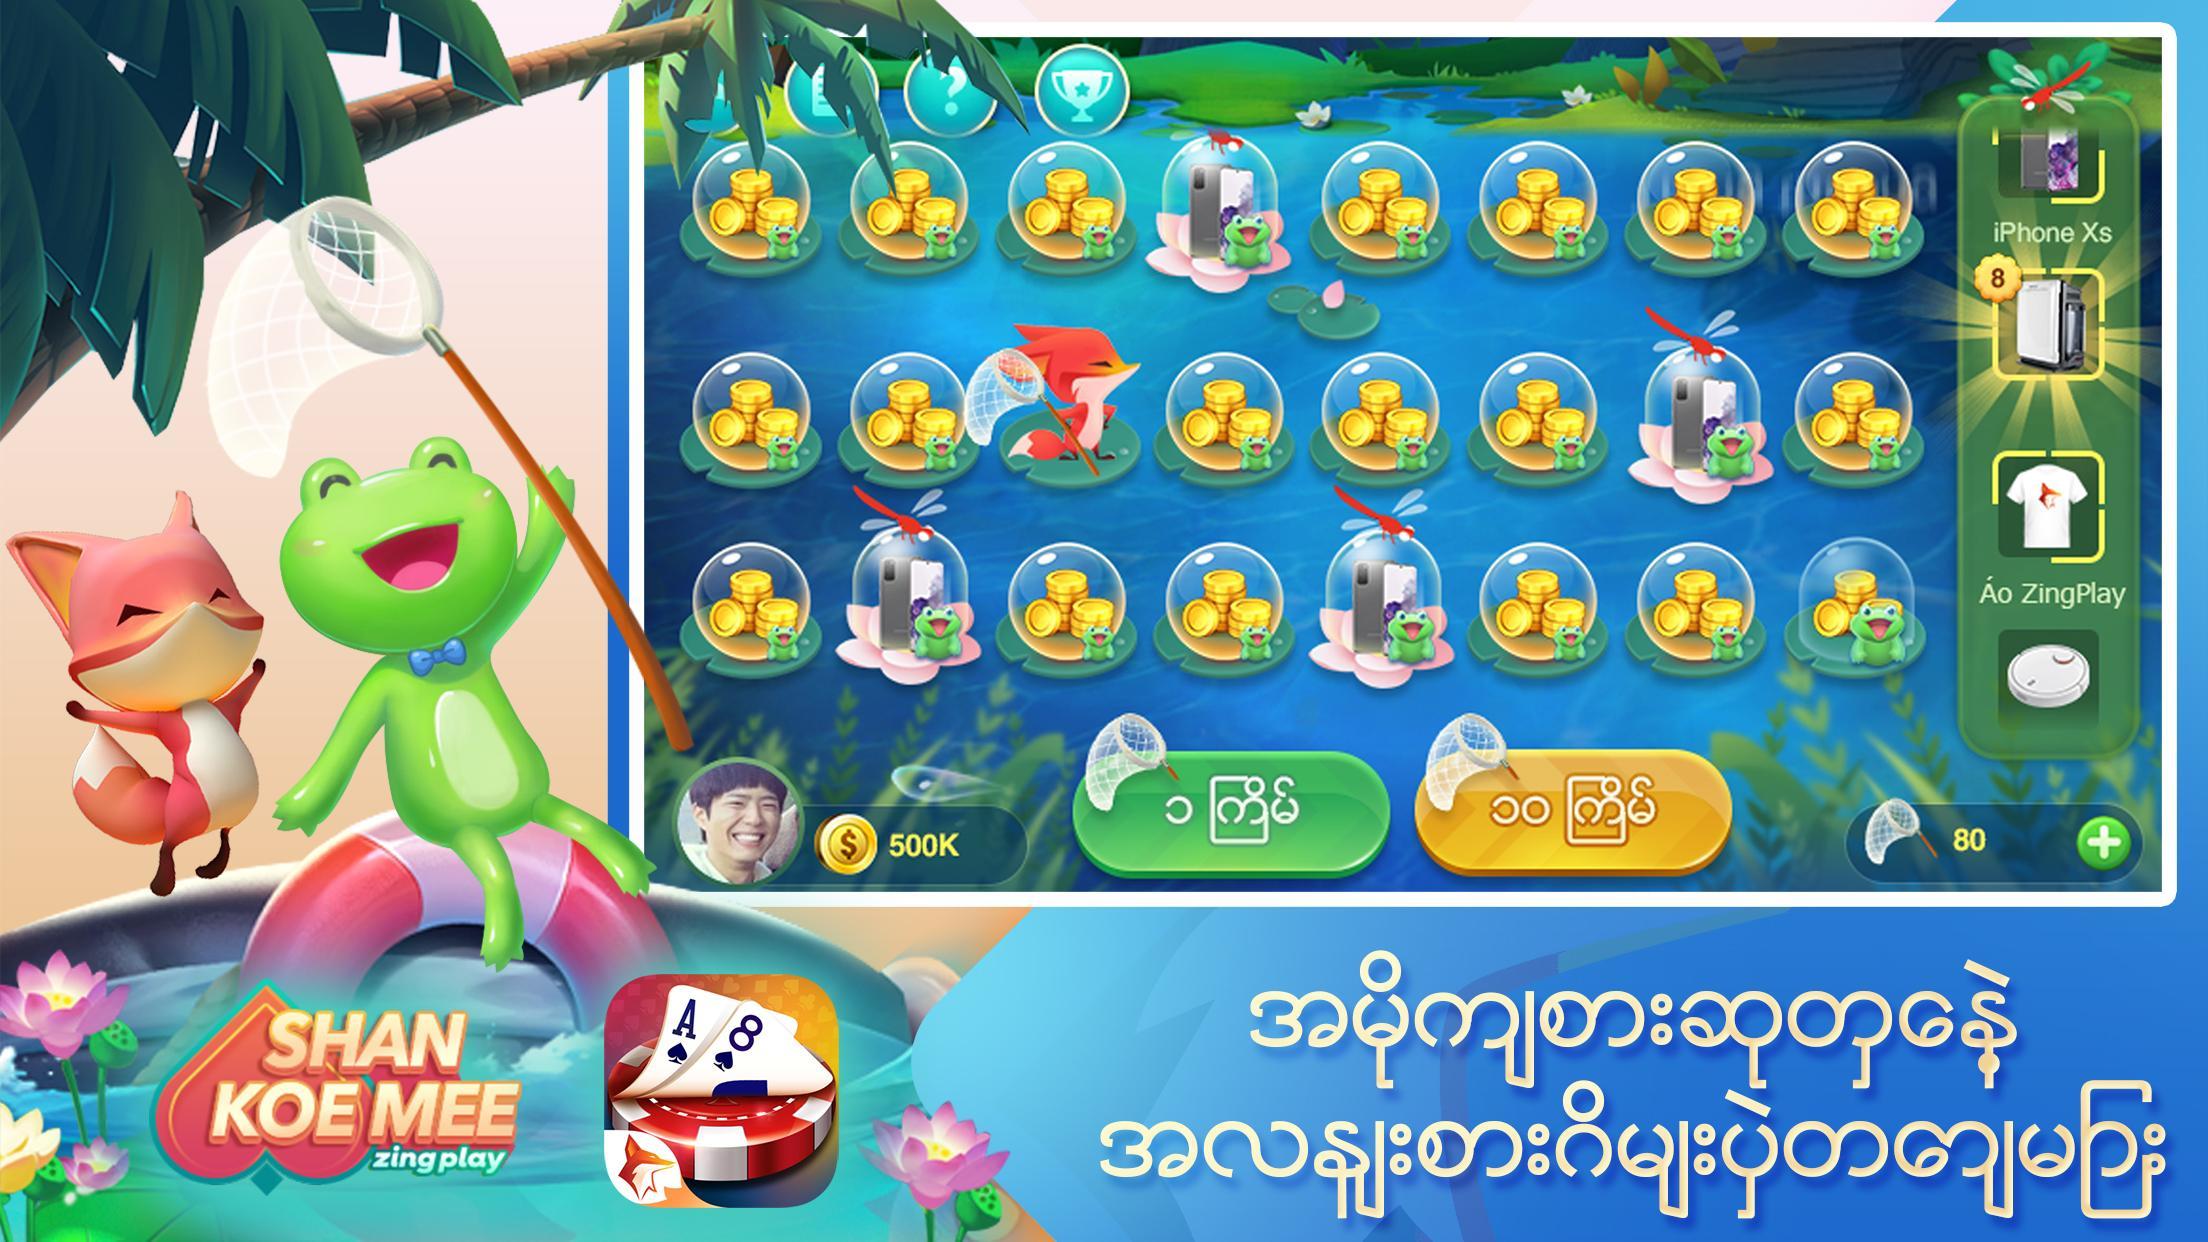 Shan Koe Mee ZingPlay -  ရွမ္းကိုးမီး 7.2 Screenshot 5